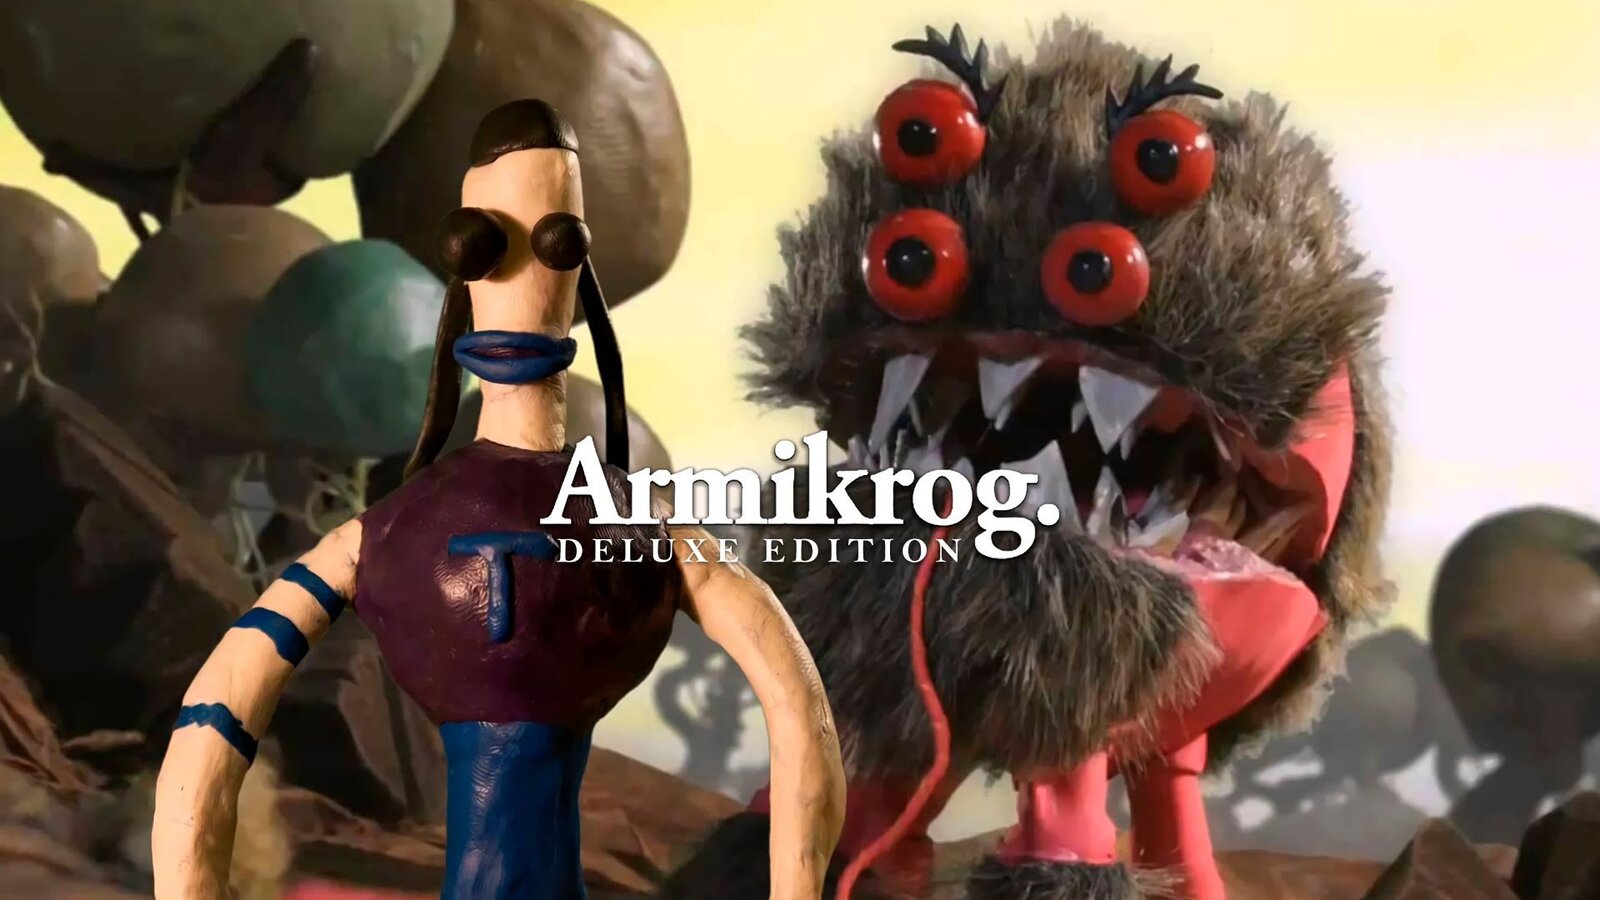 Armikrog - Deluxe Edition